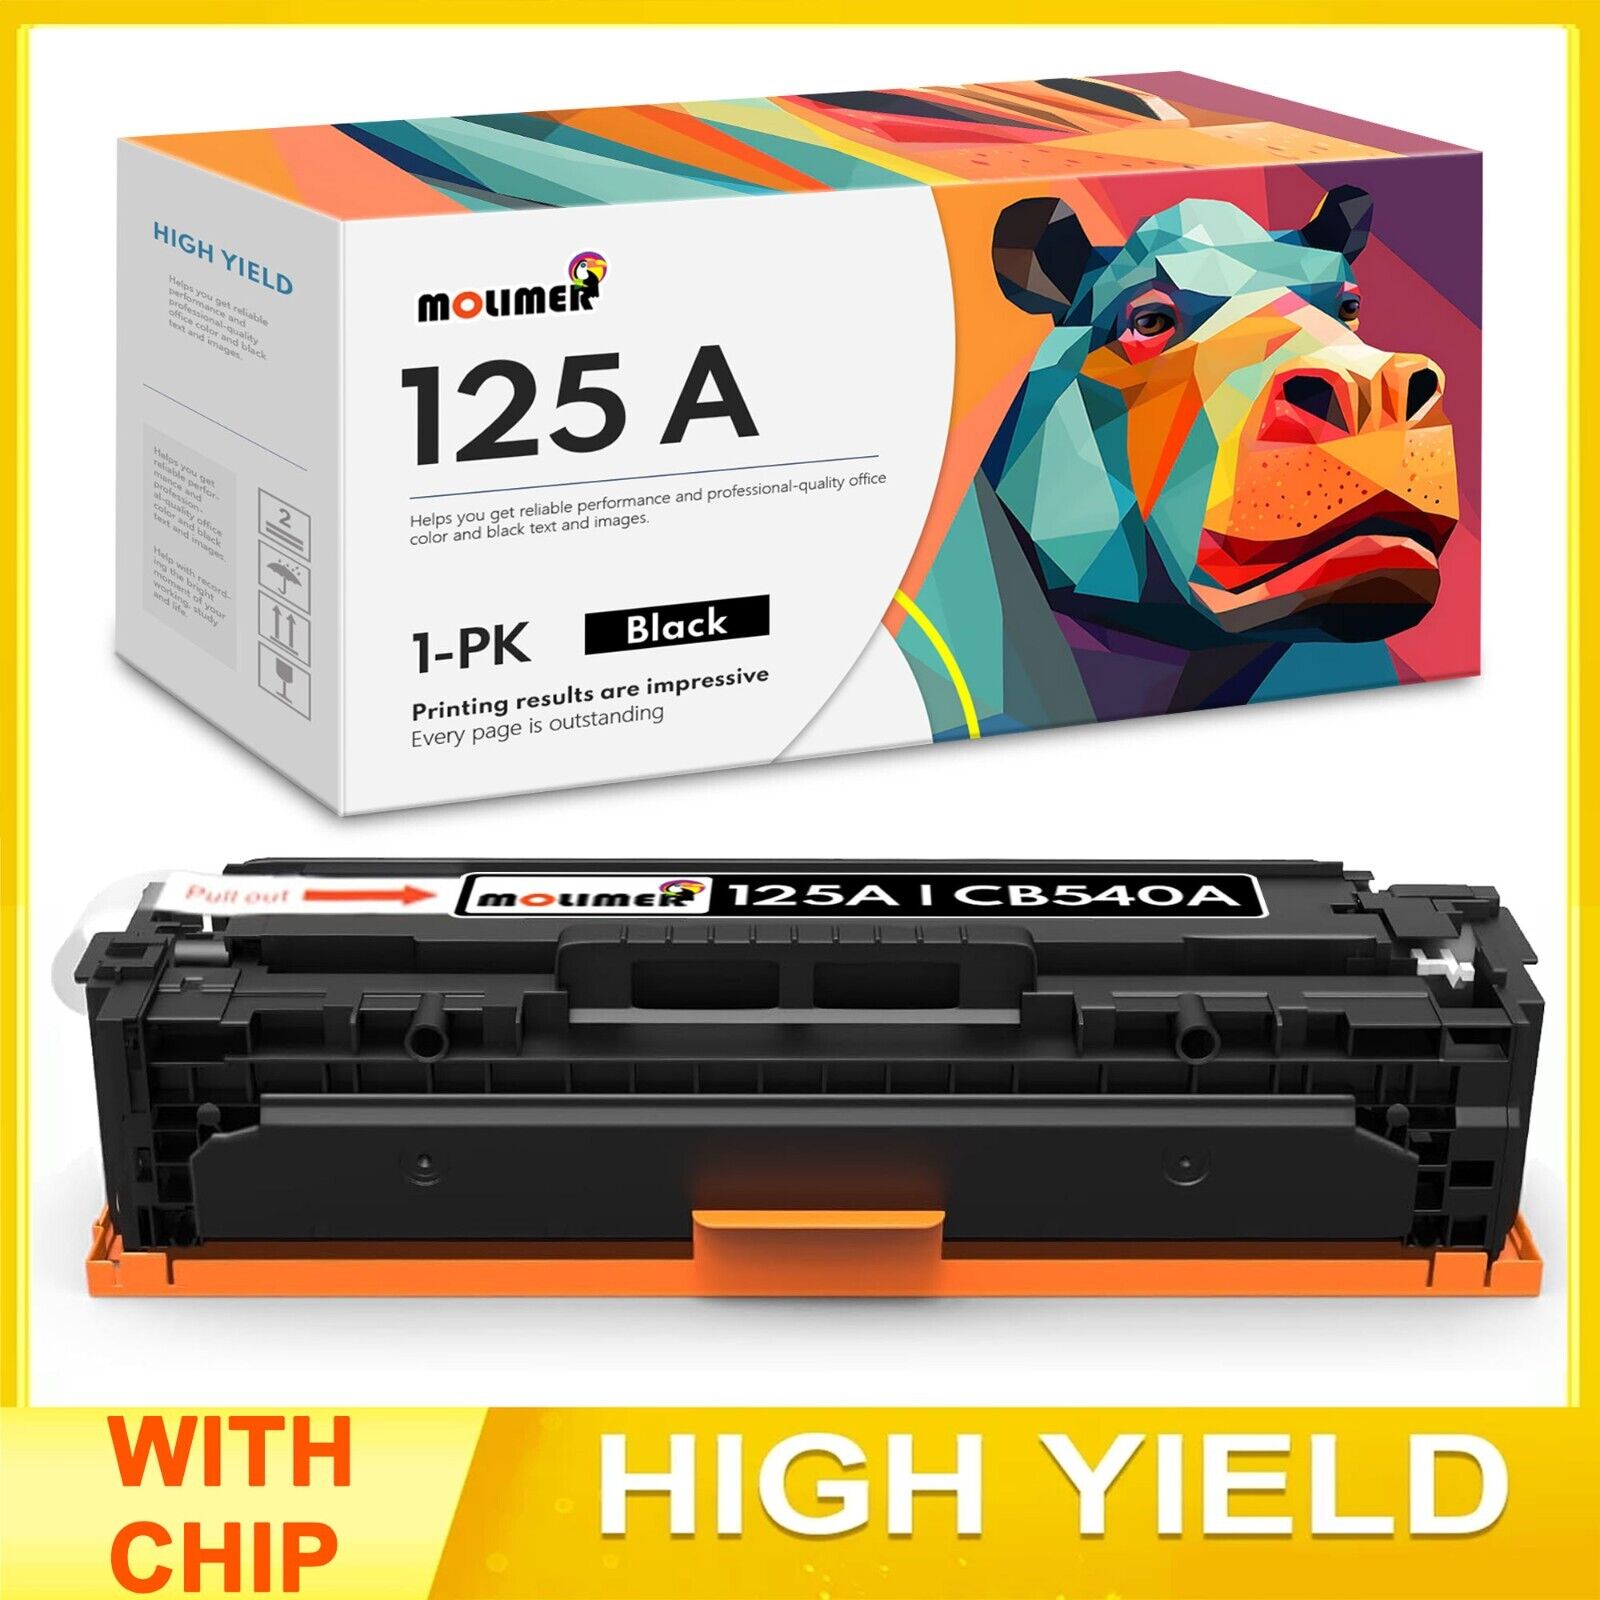 High Yield 125A Toner Cartridge Replacement for HP CB540A CP1215 CP1515n CP1518n